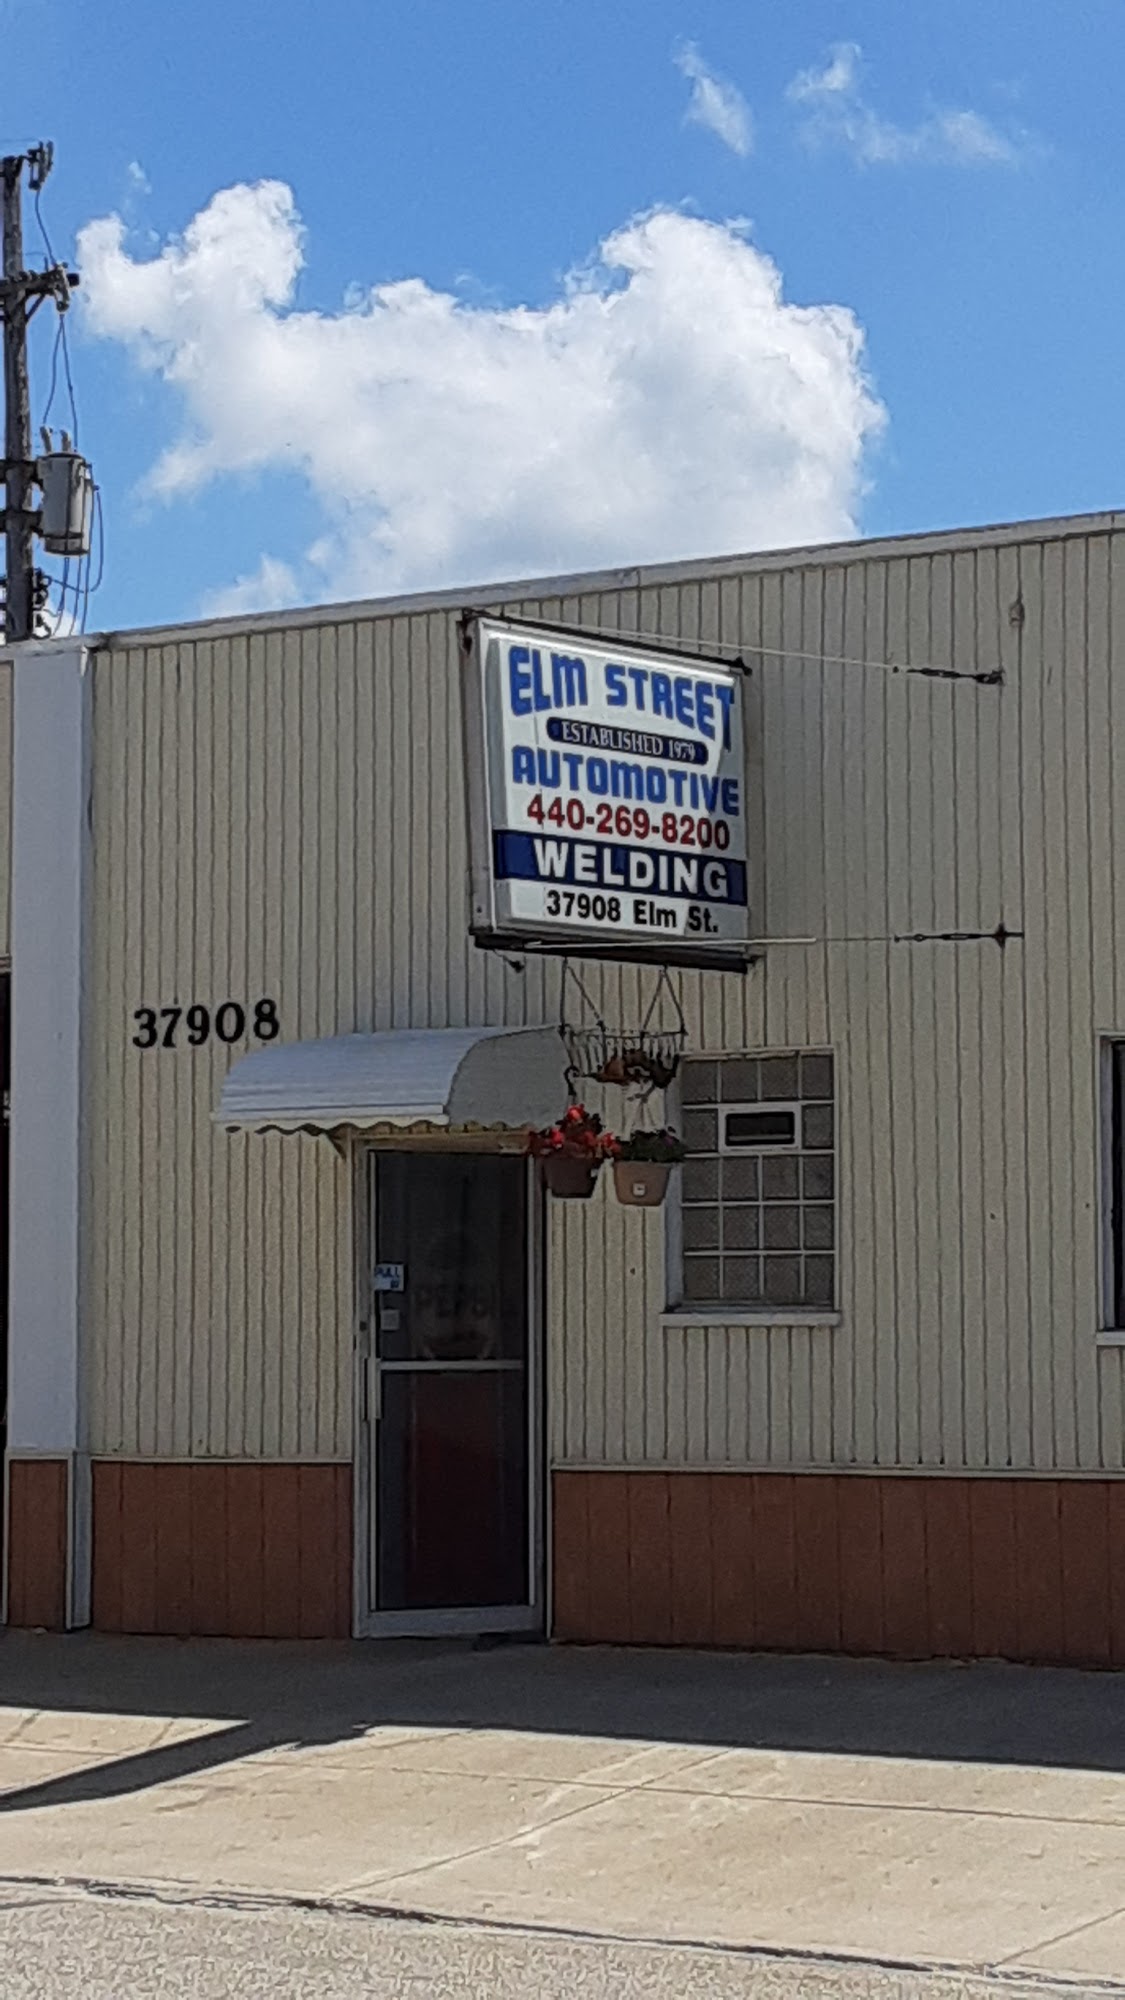 Elm Street Automotive & Weld